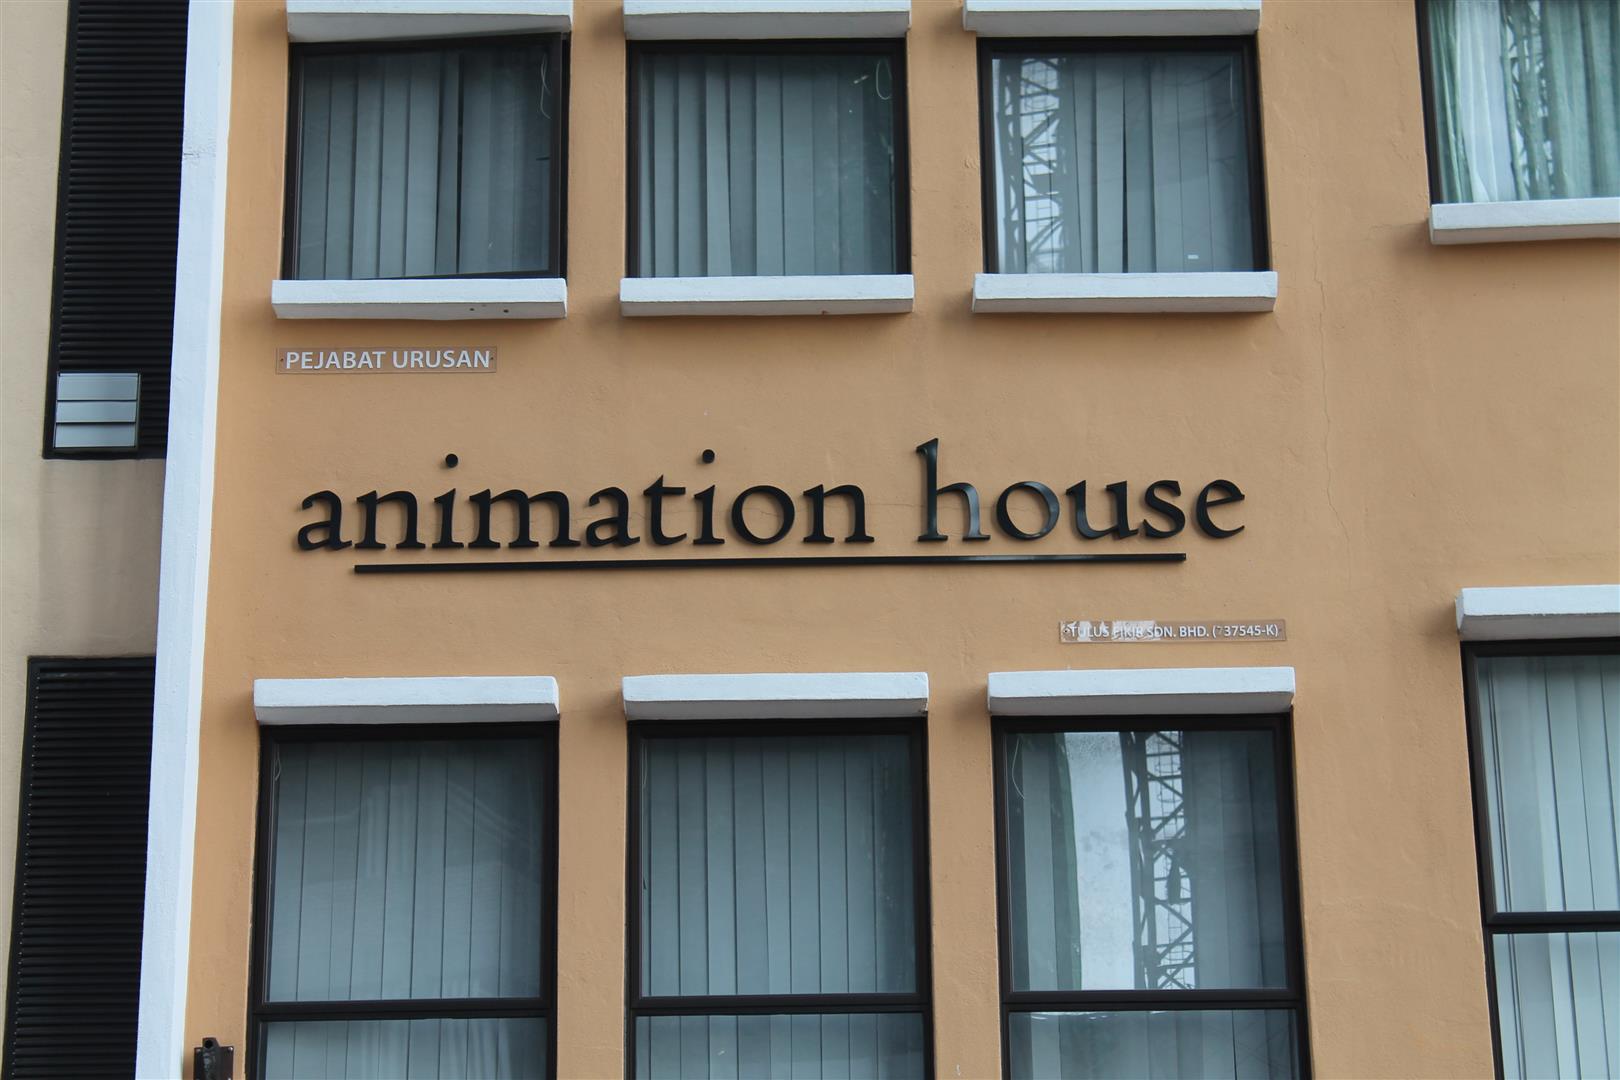 Tulus Fikir - Visit to Local Animation Company 38